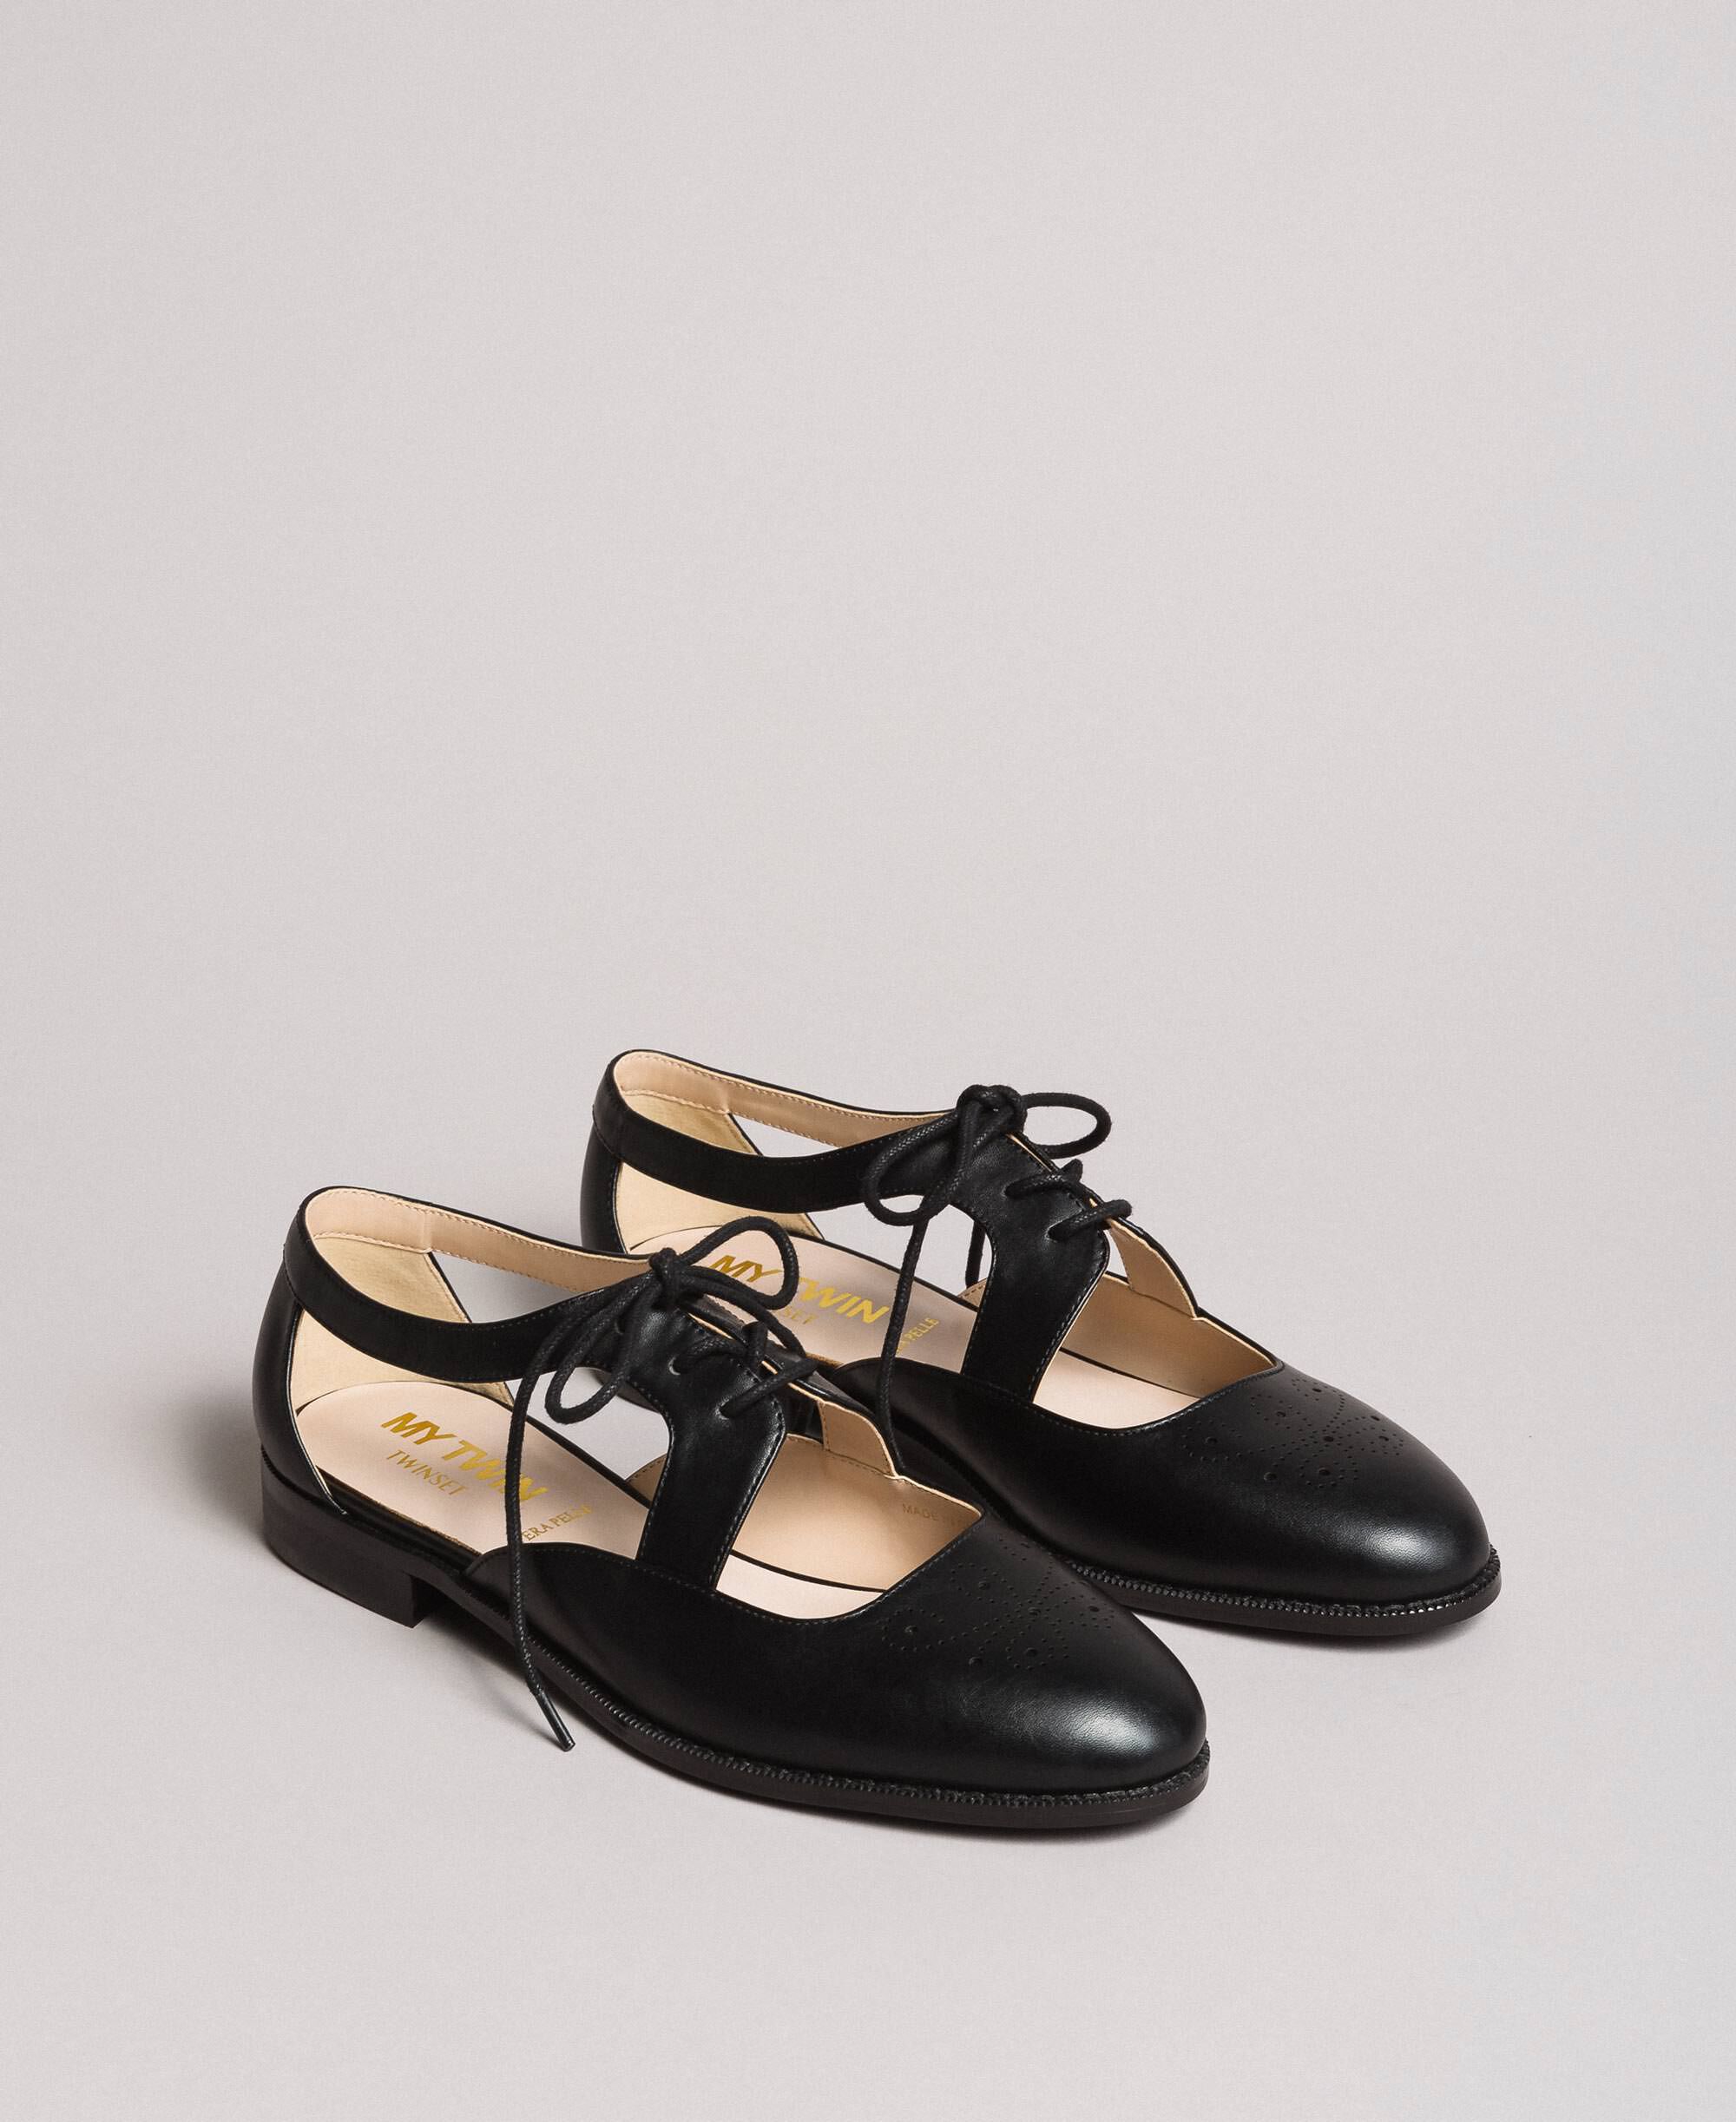 DingXiong Summer Women Cutouts Genuine Leather Shoes Comfortable Buckle Flats Nurse Casual Handmade Ballet 